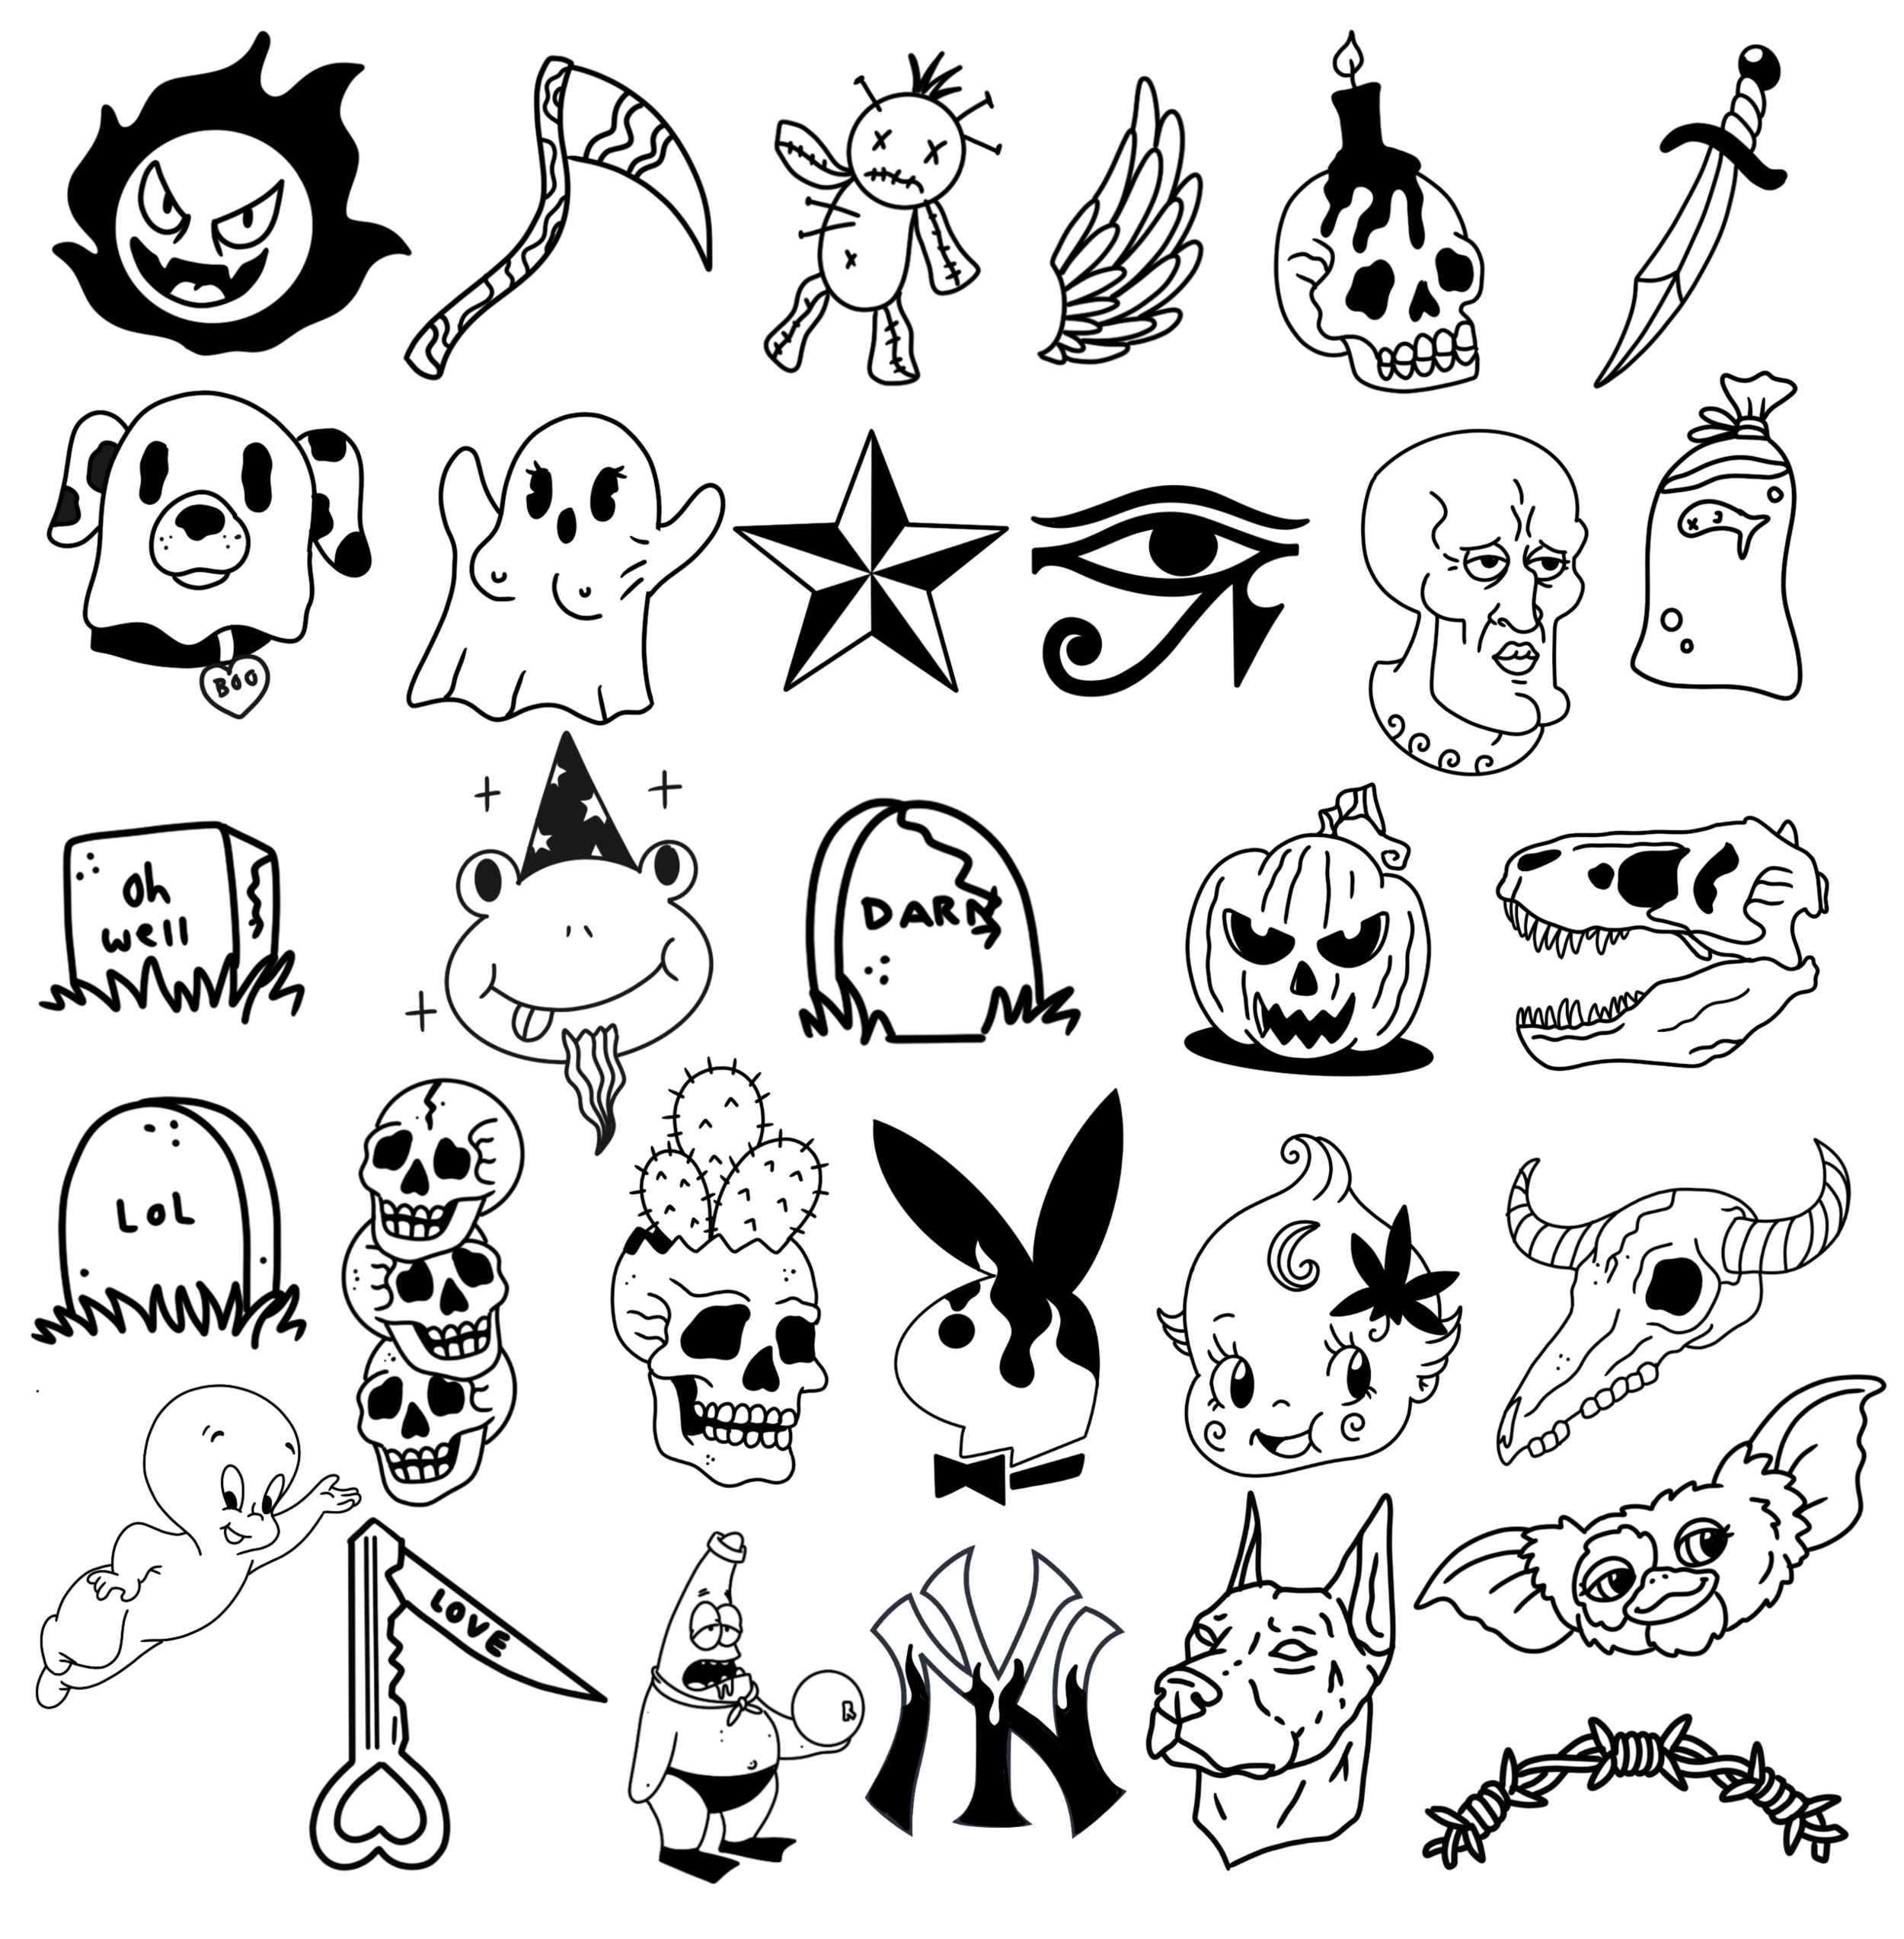 AlyasaGKTattoos on Twitter 4 more pages of Halloween flash tattoos DM me  for tattoos httpstco51i6wpjqaa toronto httpstcoaeVIq1L9kP  X